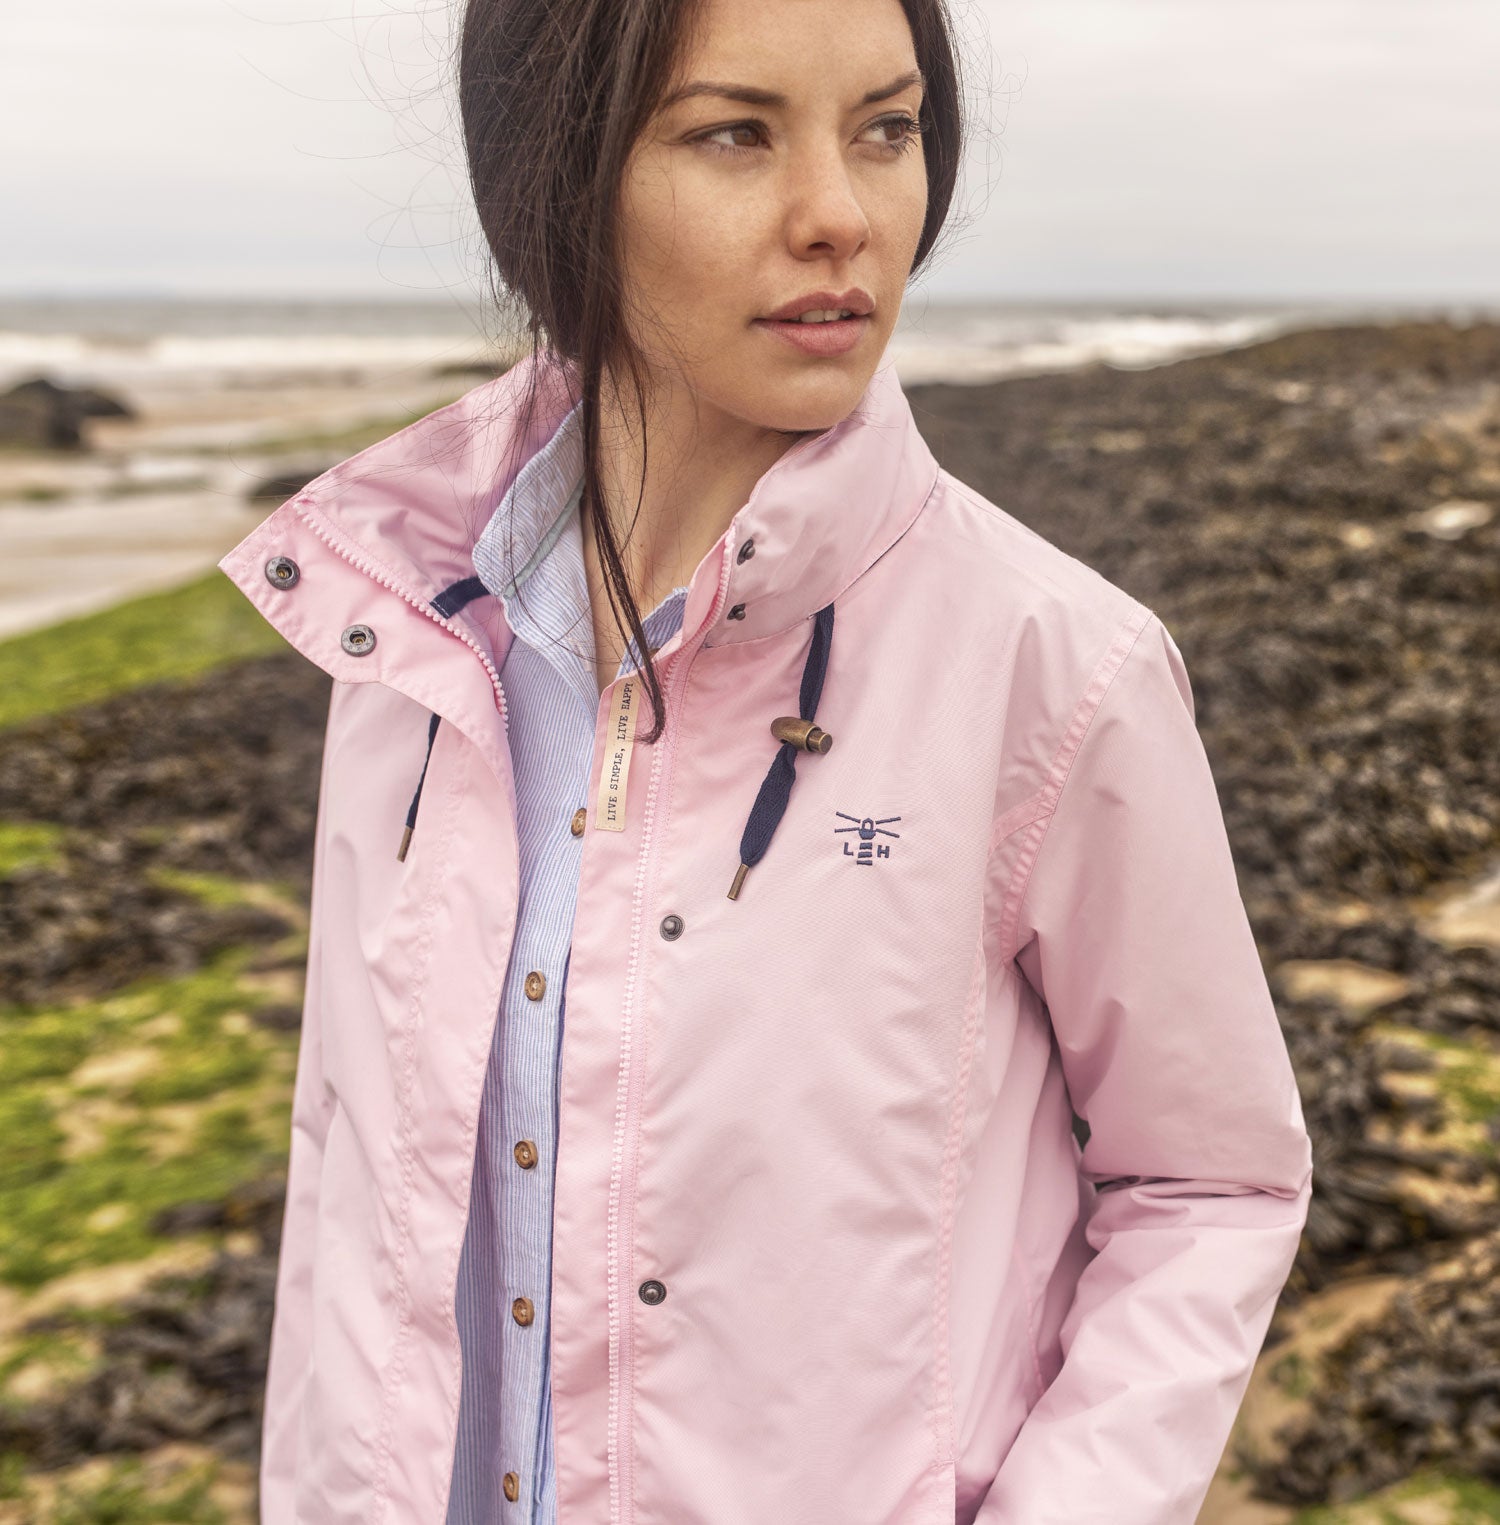 Lady on the beach wears Lighthouse Beachcomber Waterproof Jacket